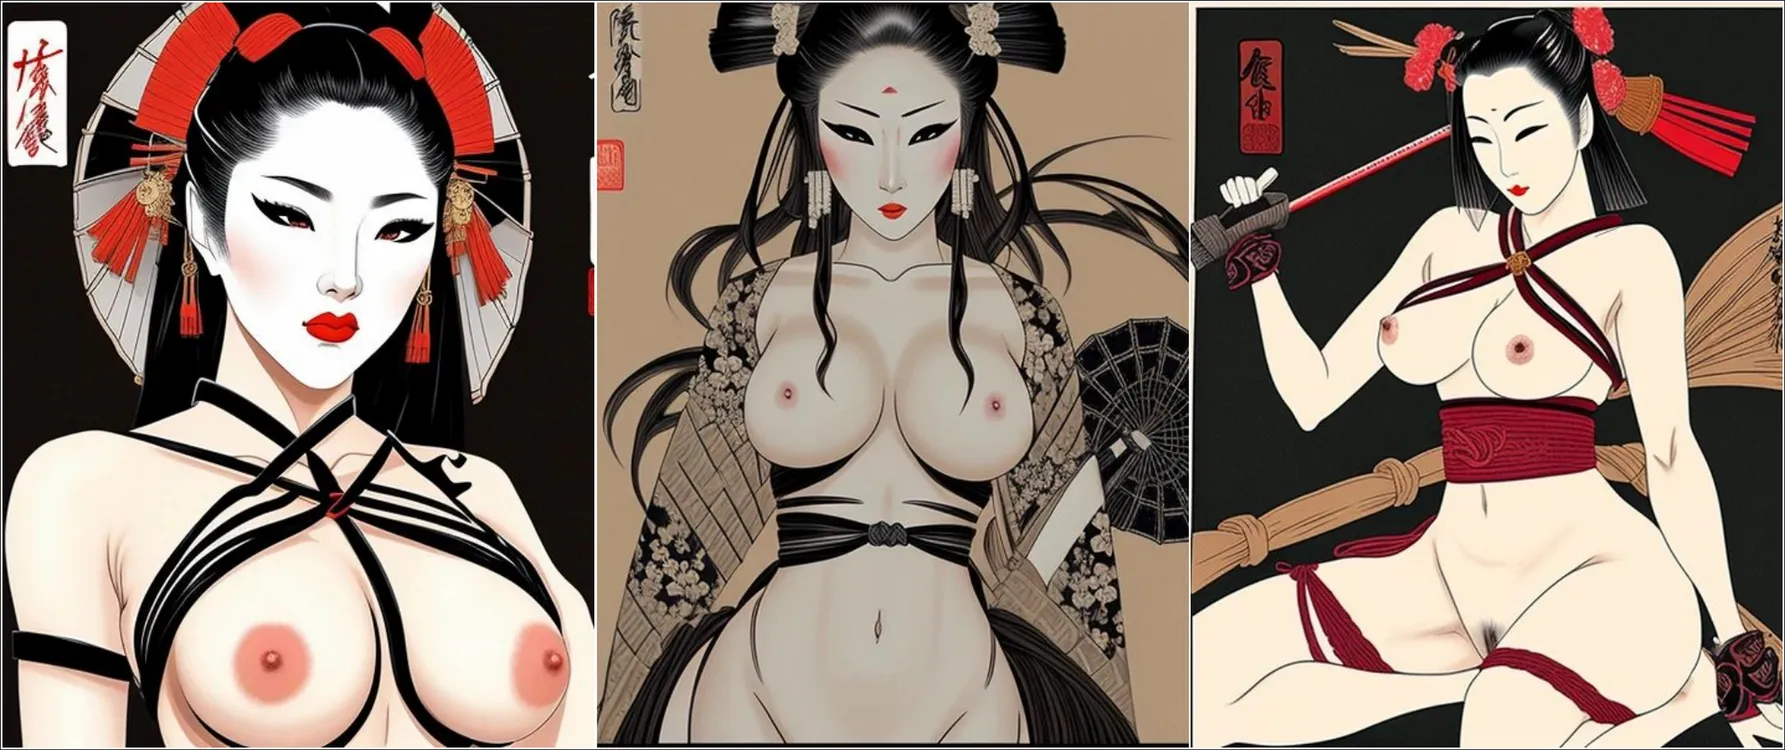 shunga geishas